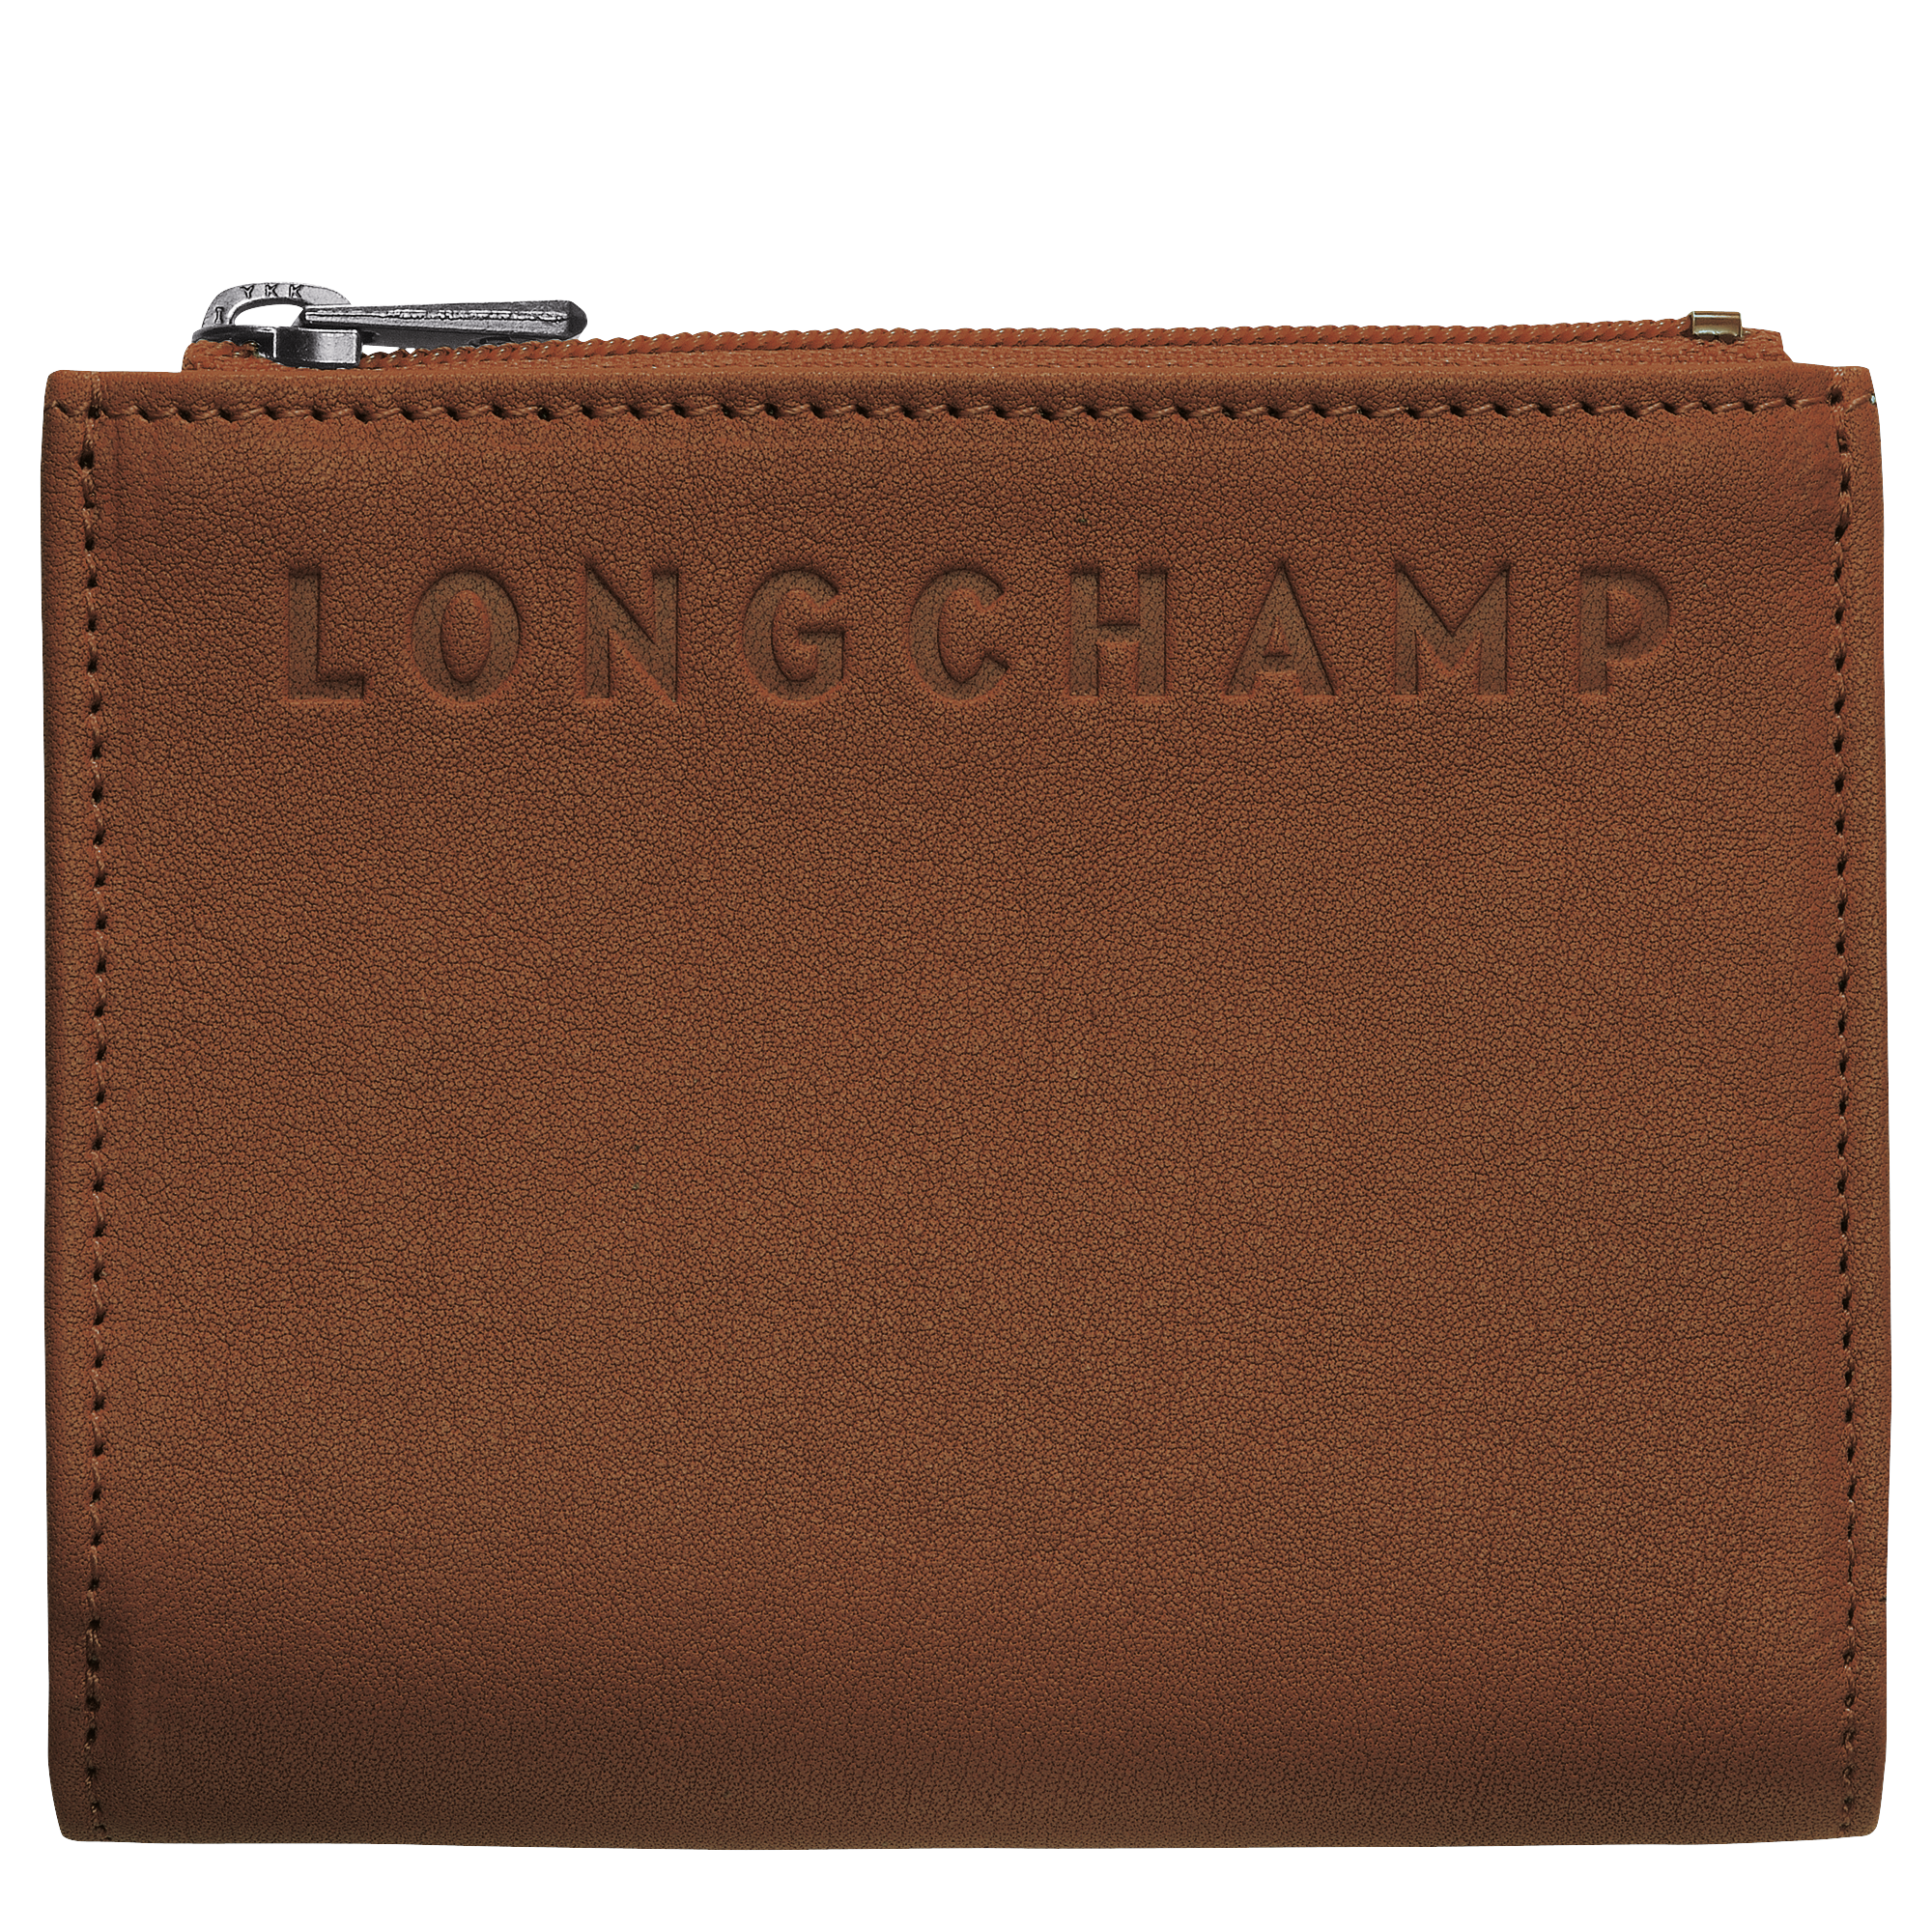 longchamps wallets